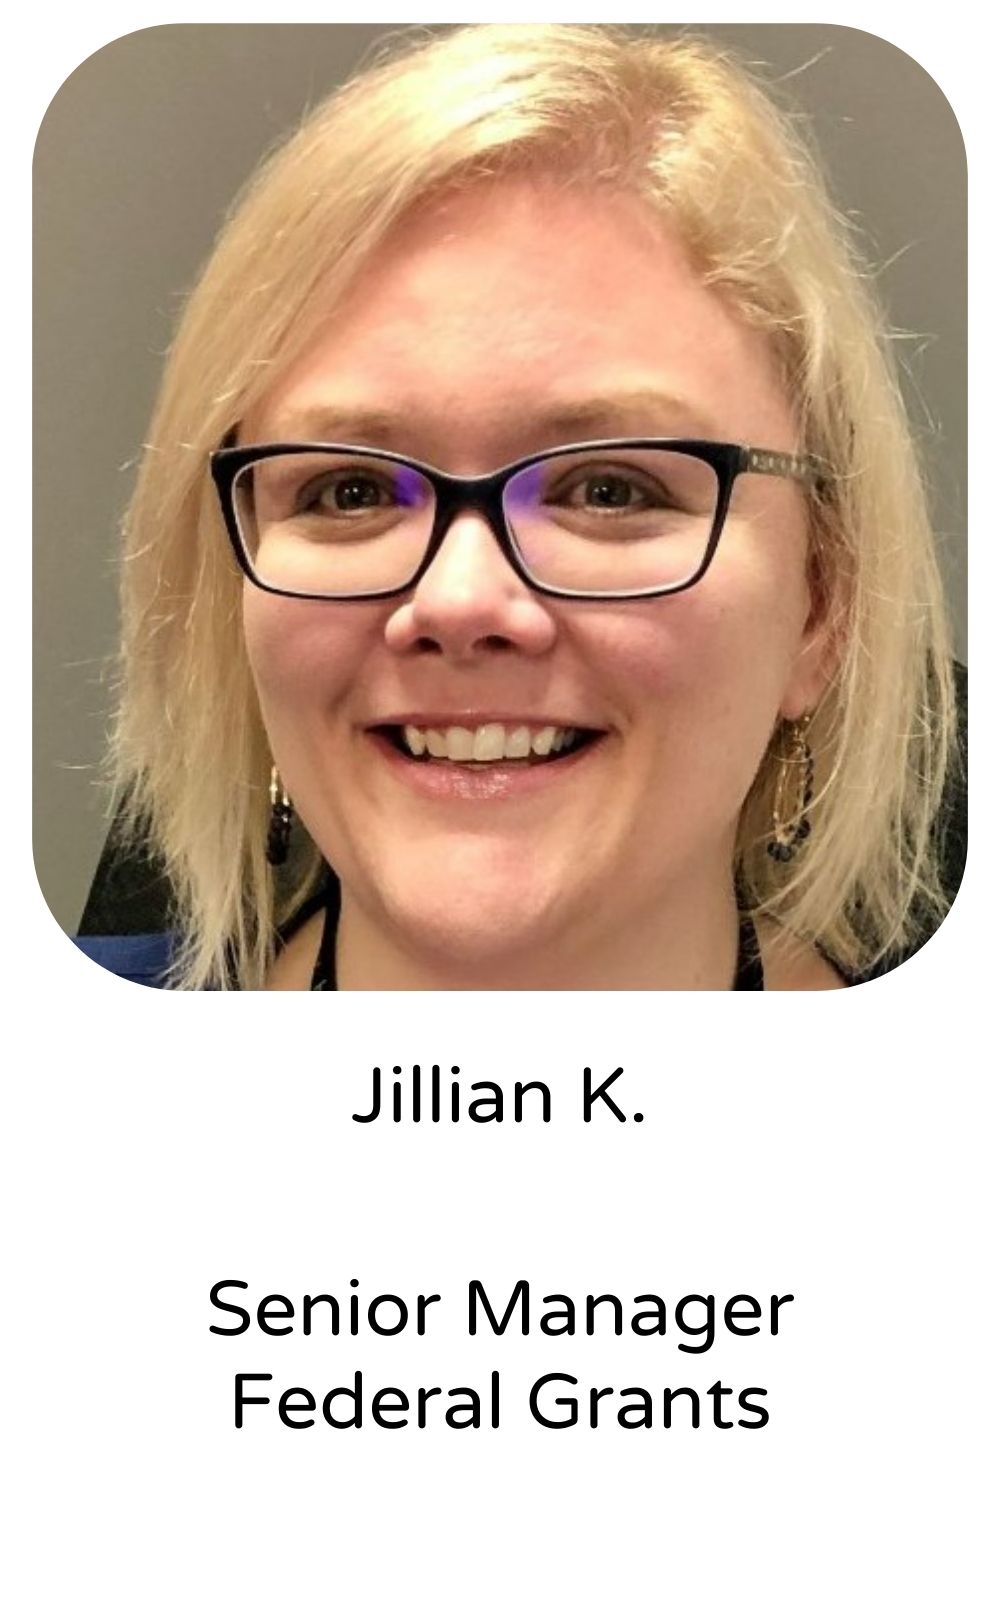 Jillian K, Senior Manager, Federal Grants